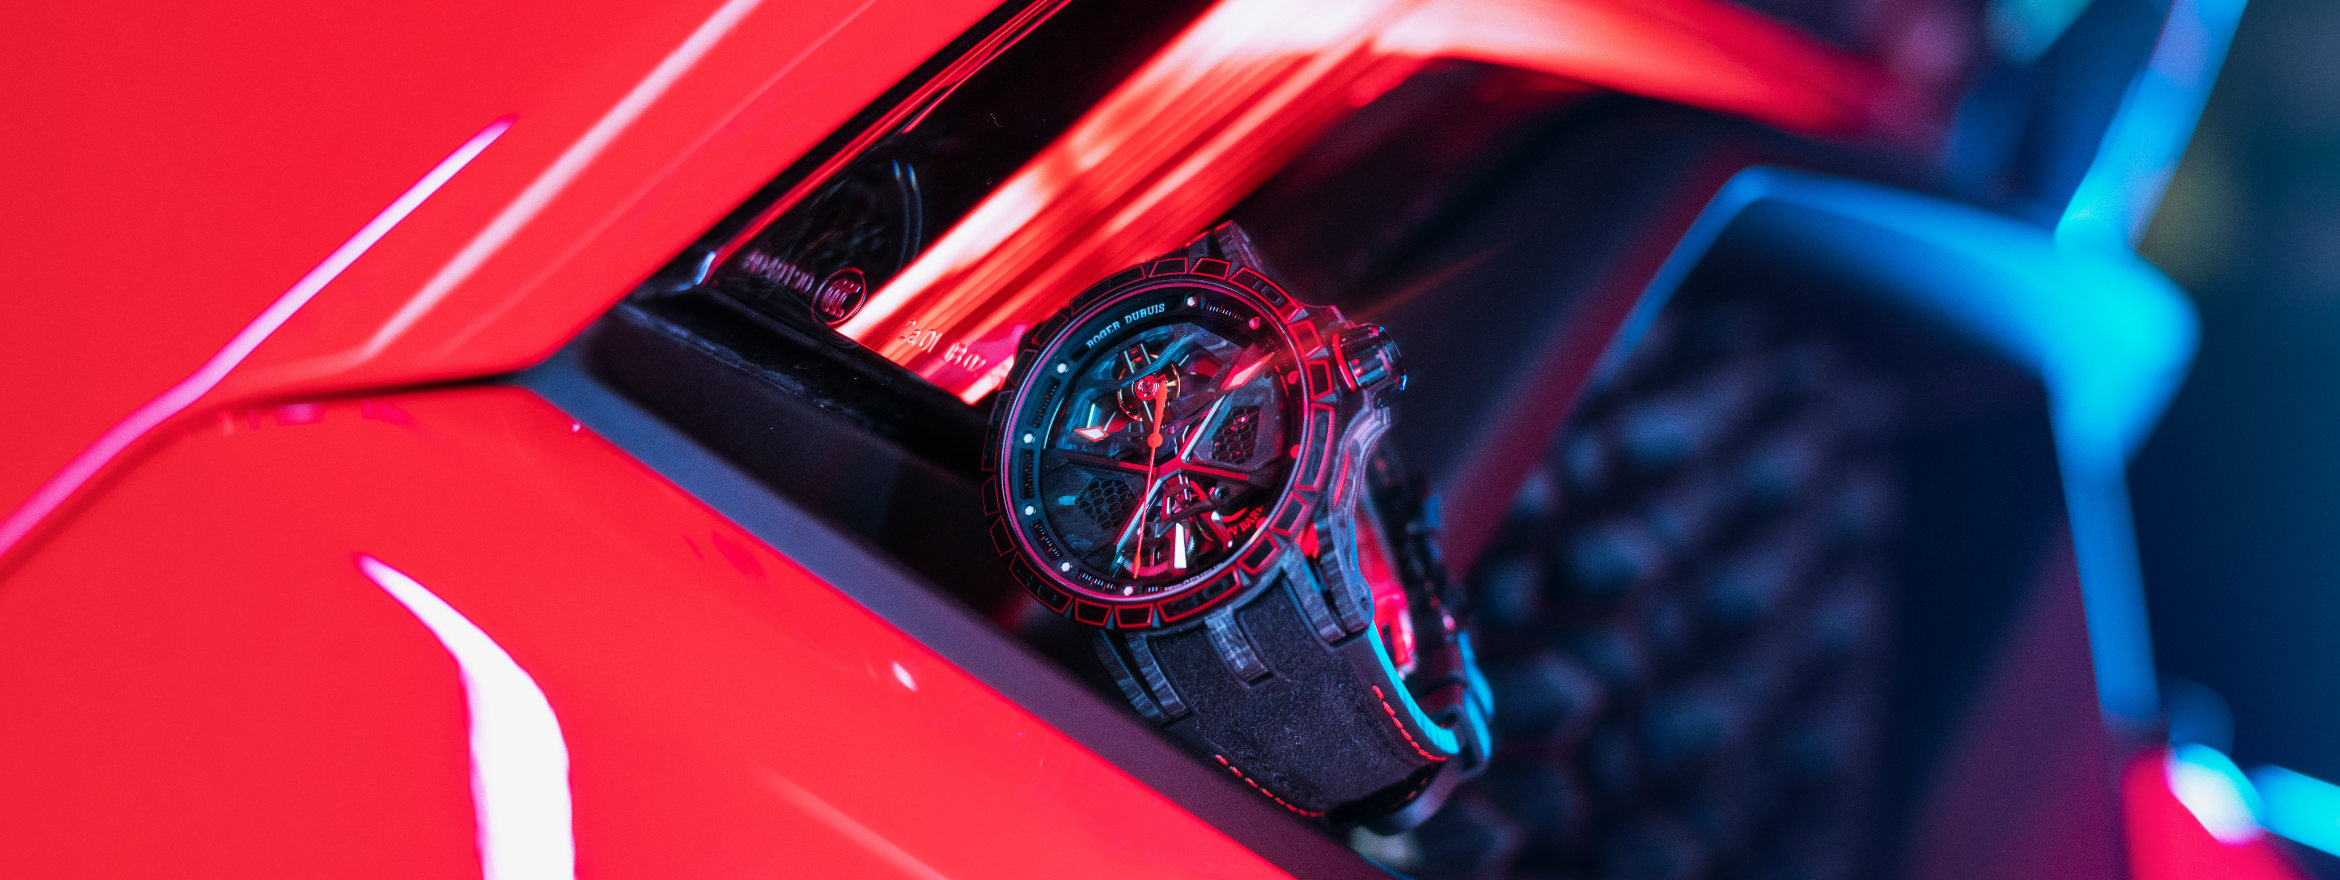 Lamborghini on the Wrist – Roger Dubuis in 2019